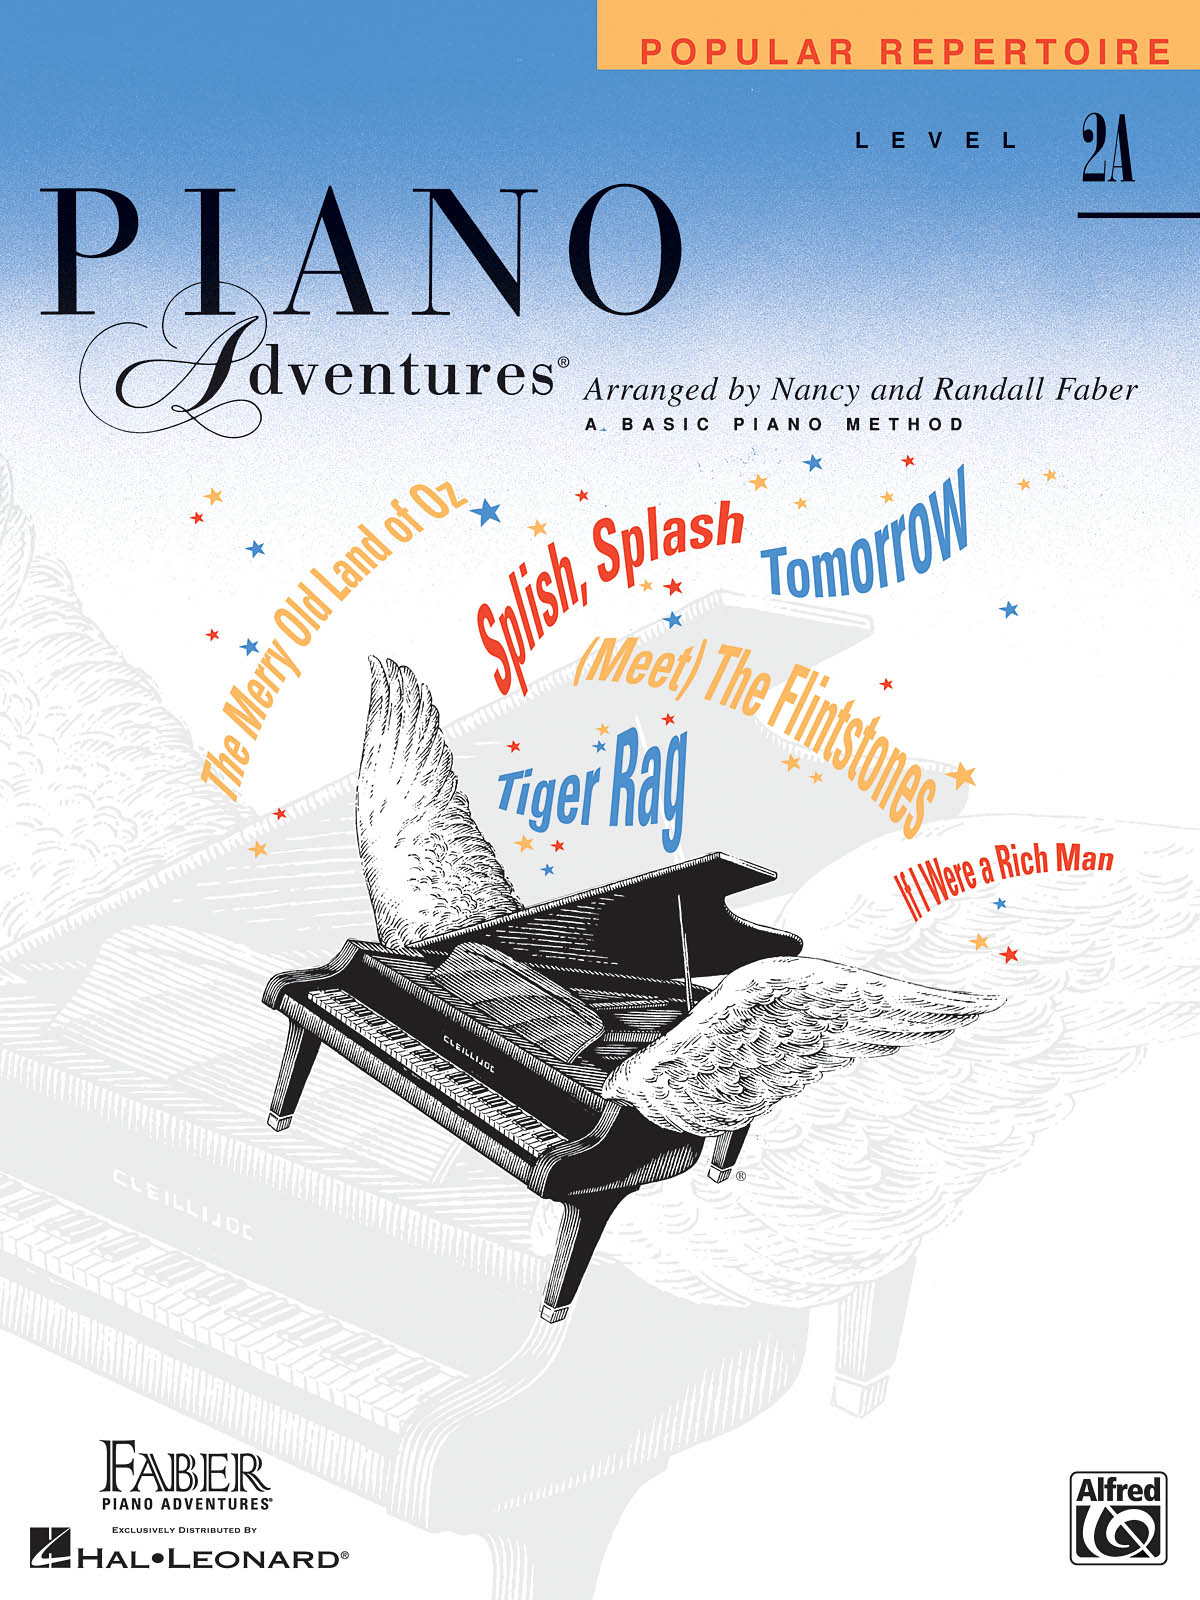 Piano Adventures Level 2A - Popular Repertoire - škola hry na klavír